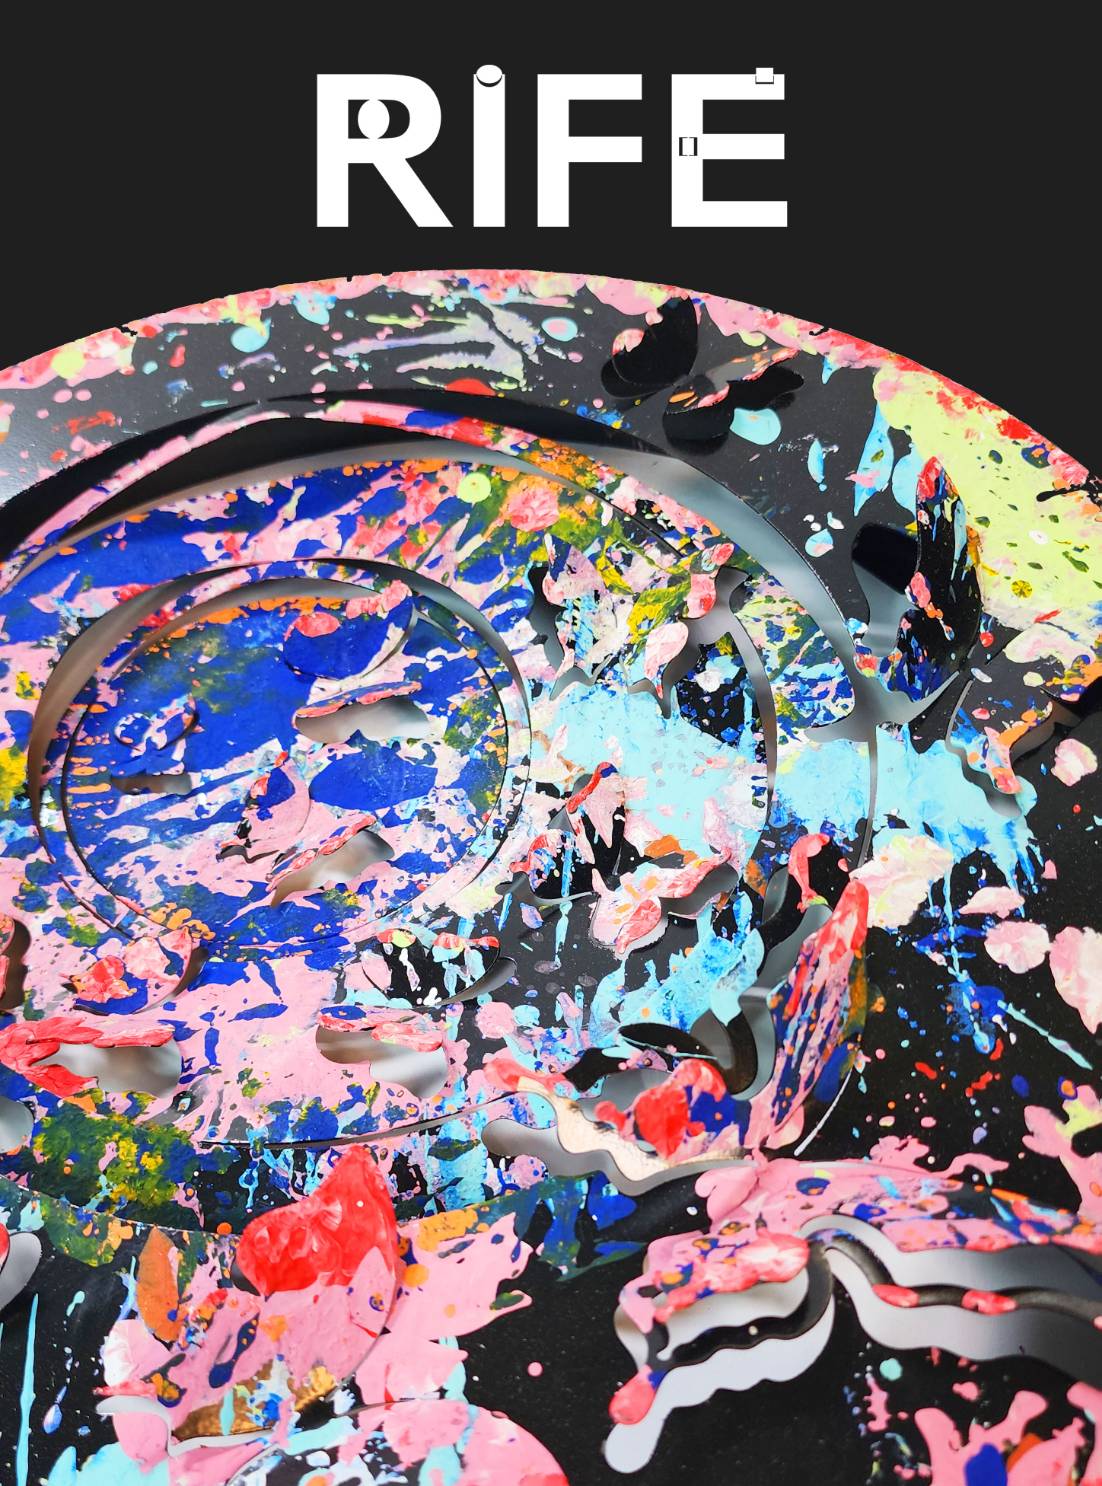 "RIFE" ถ่ายทอดอารมณ์งานโลหะให้มีจิตวิญญาณ สะท้อนเรื่องราวผ่านสีสันแนว Abstract